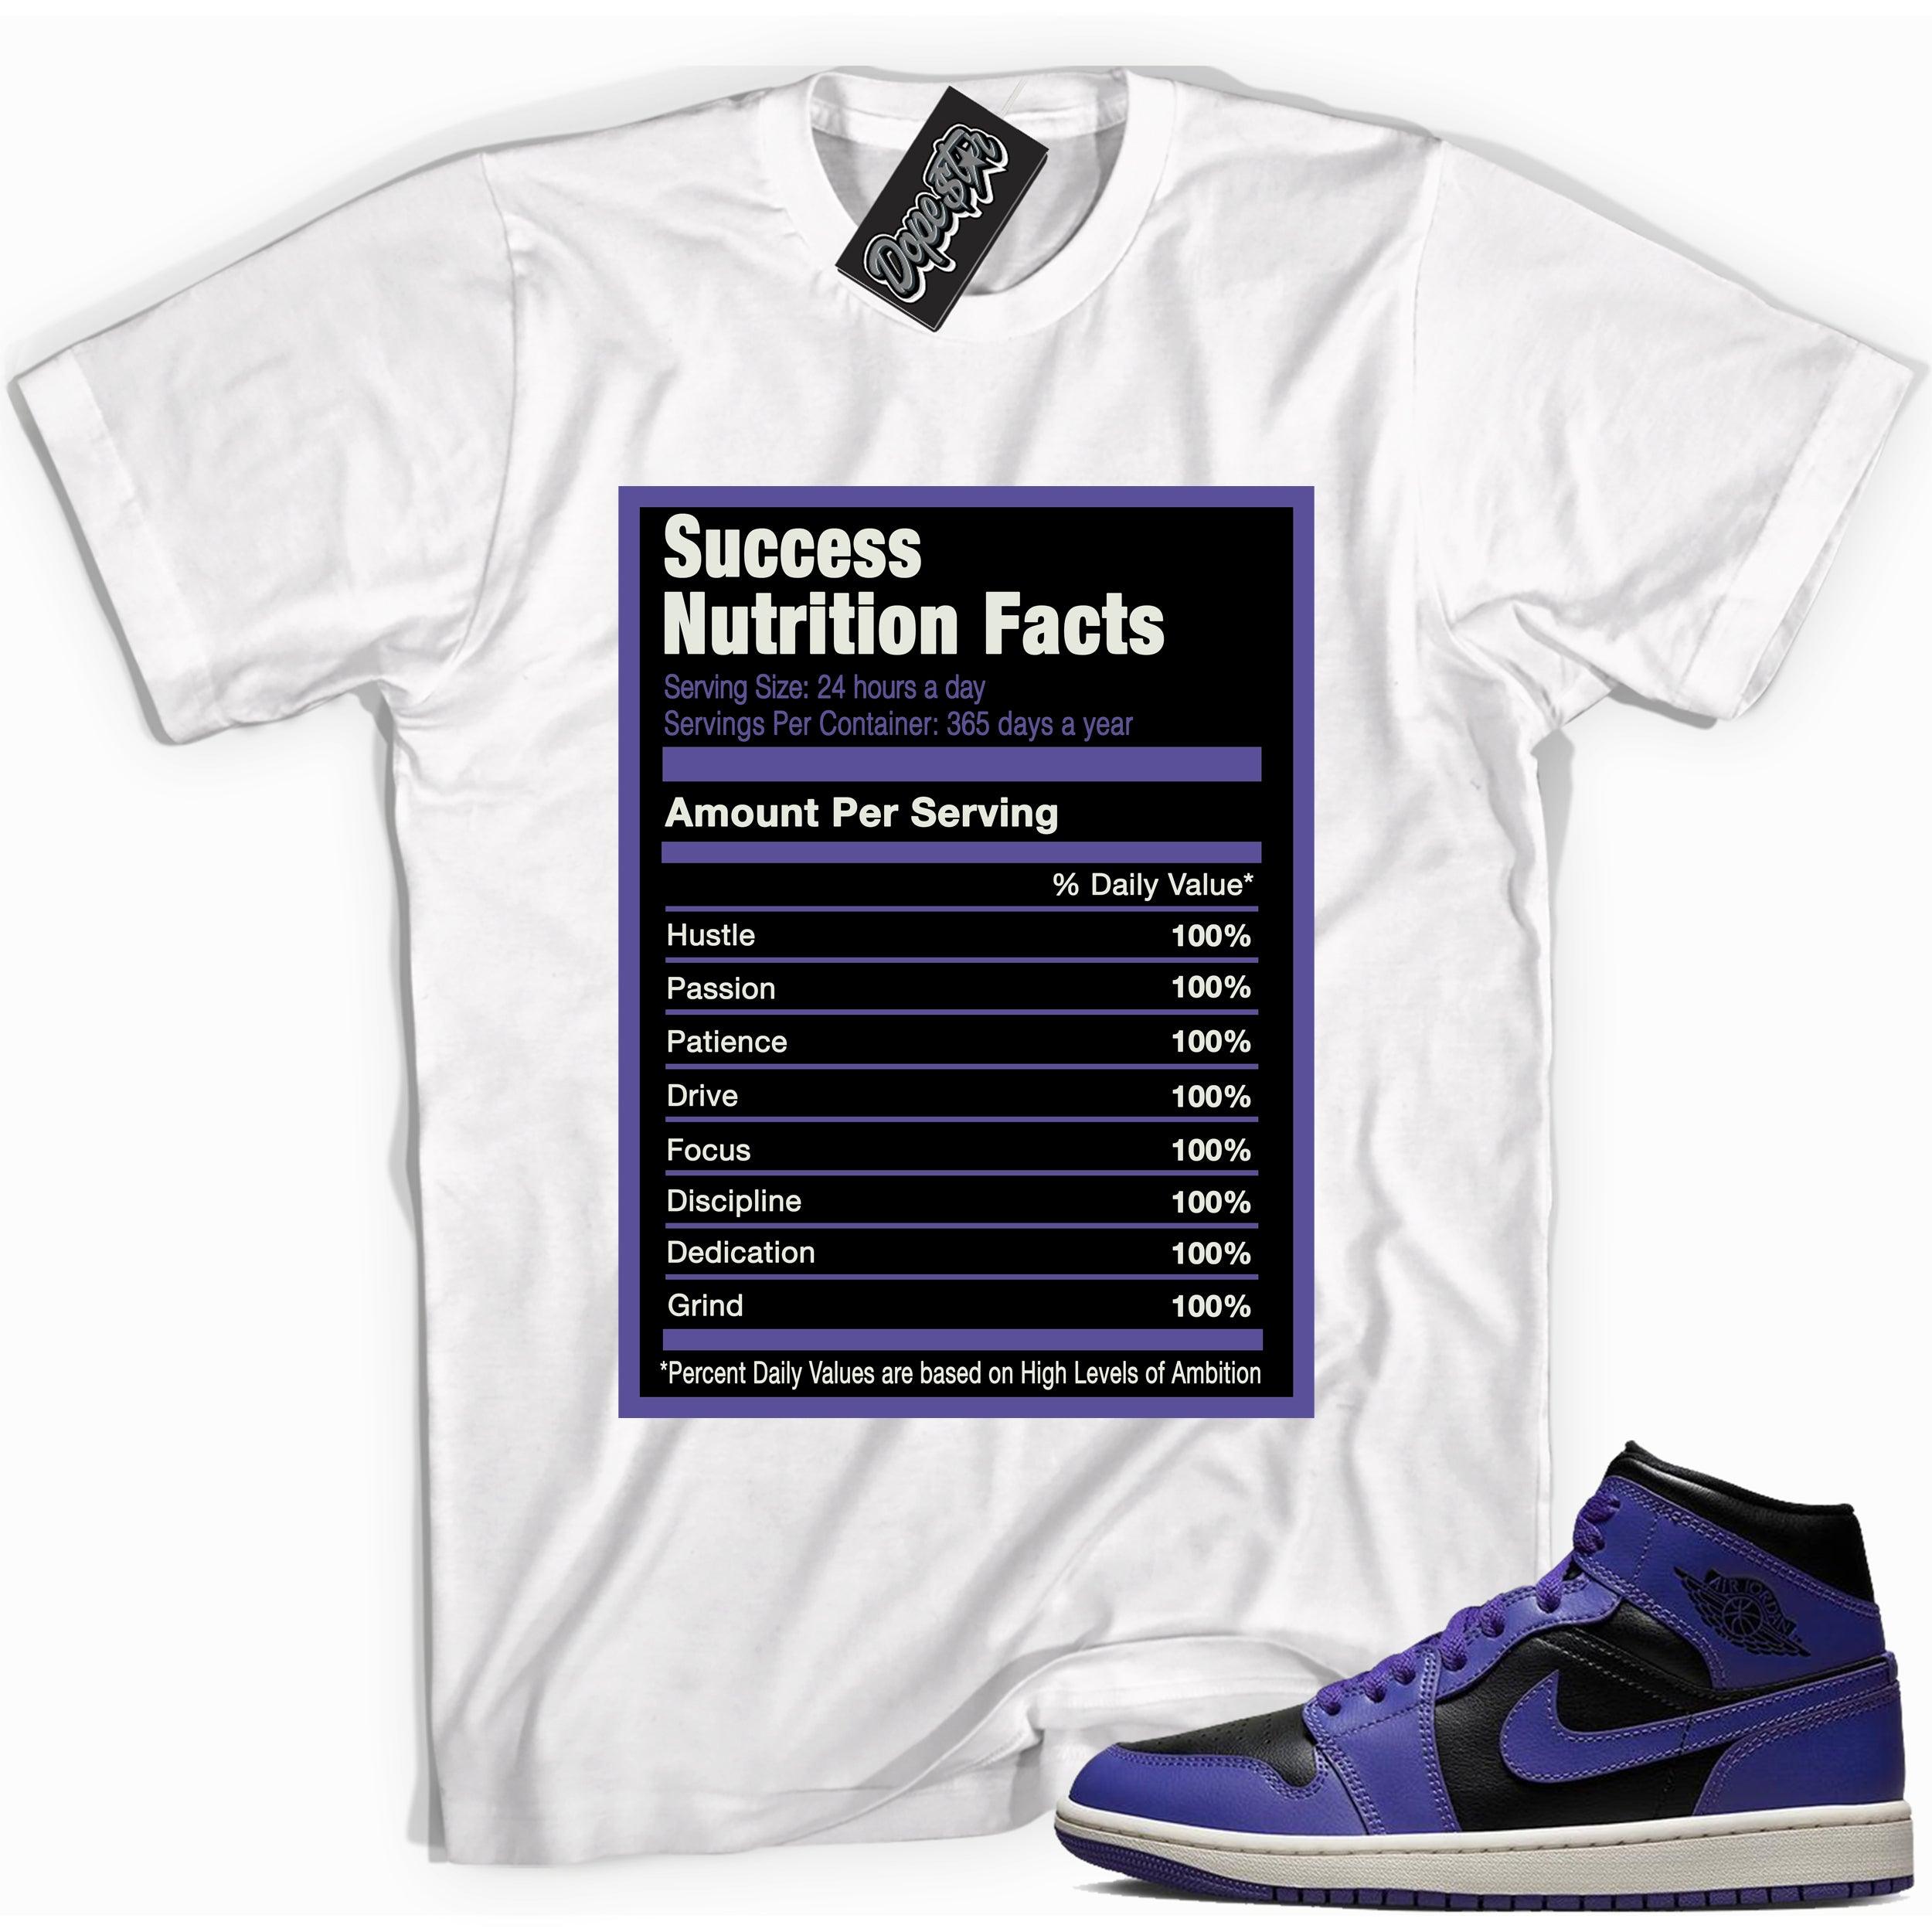 Success Nutrition Sneaker Tee AJ 1 Mid Purple Black photo